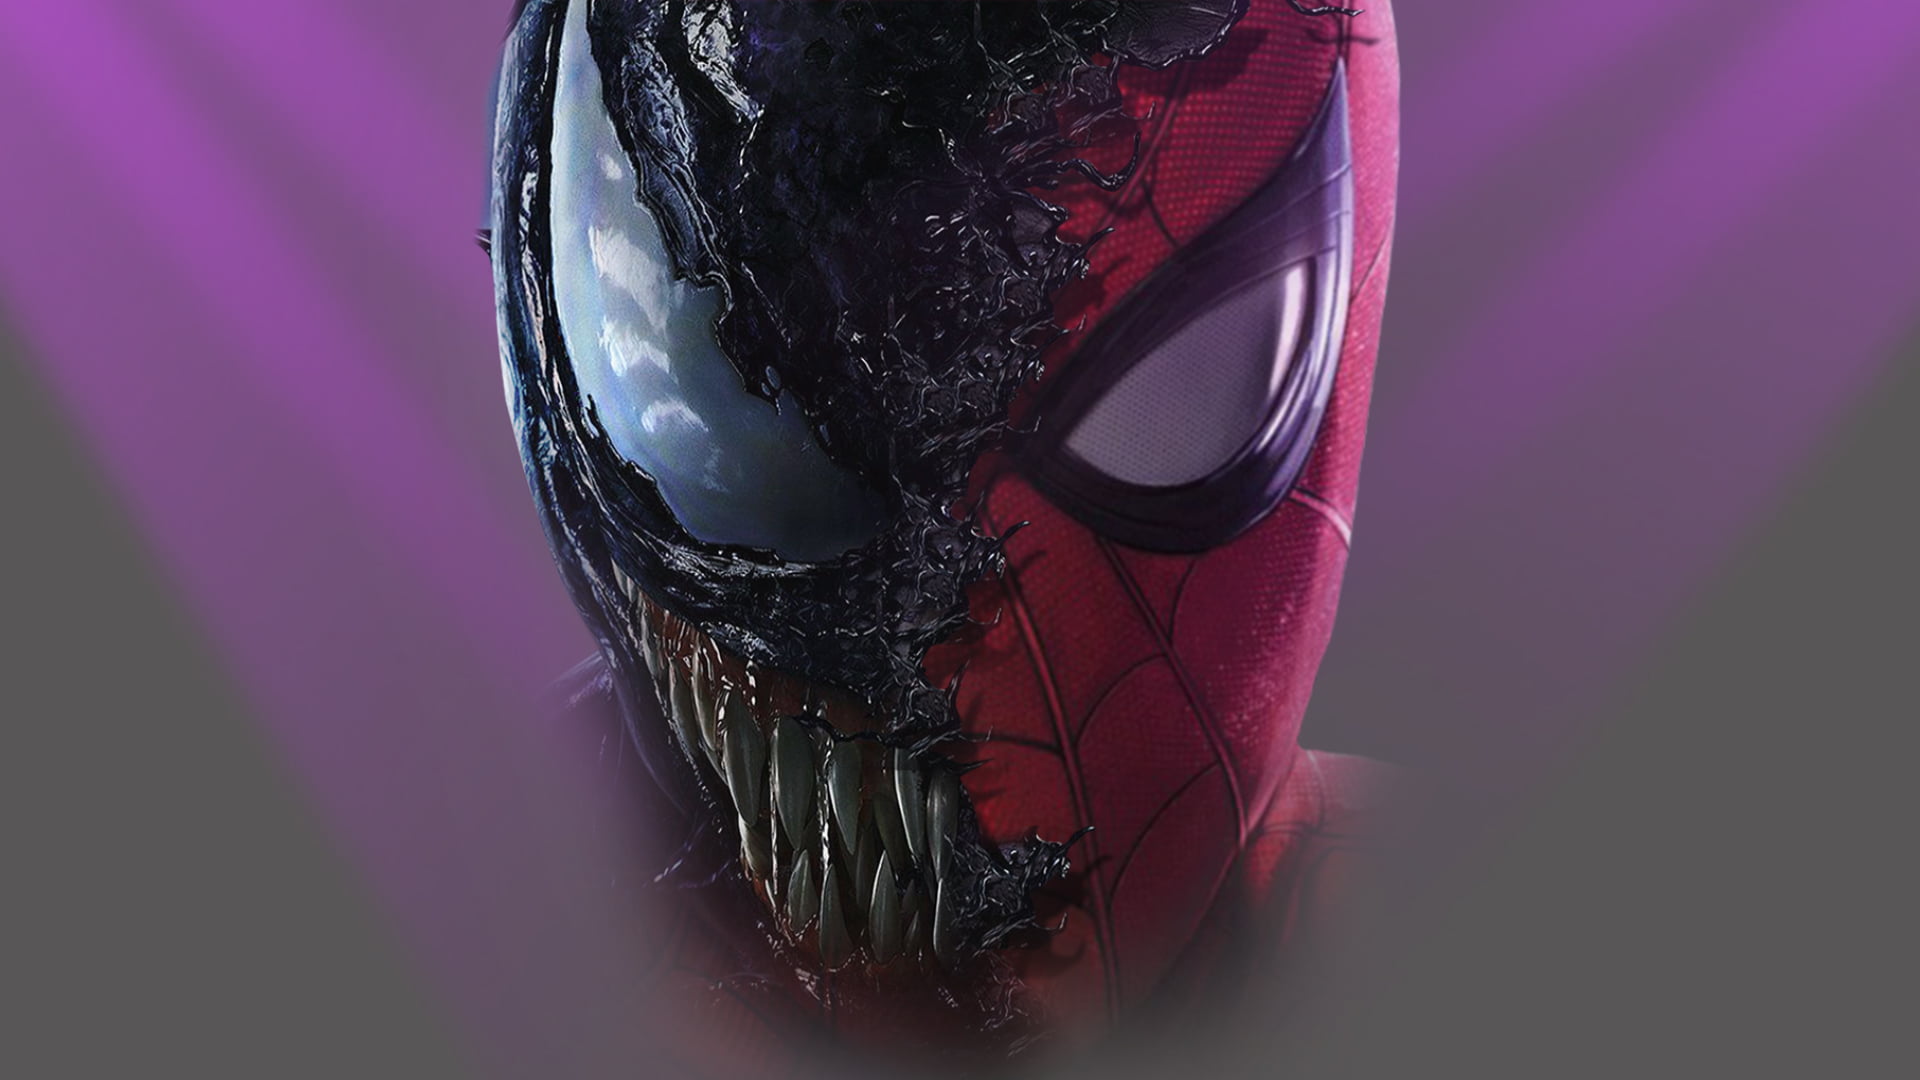 Venom, Spider-Man, artwork, mask, superhero, creature